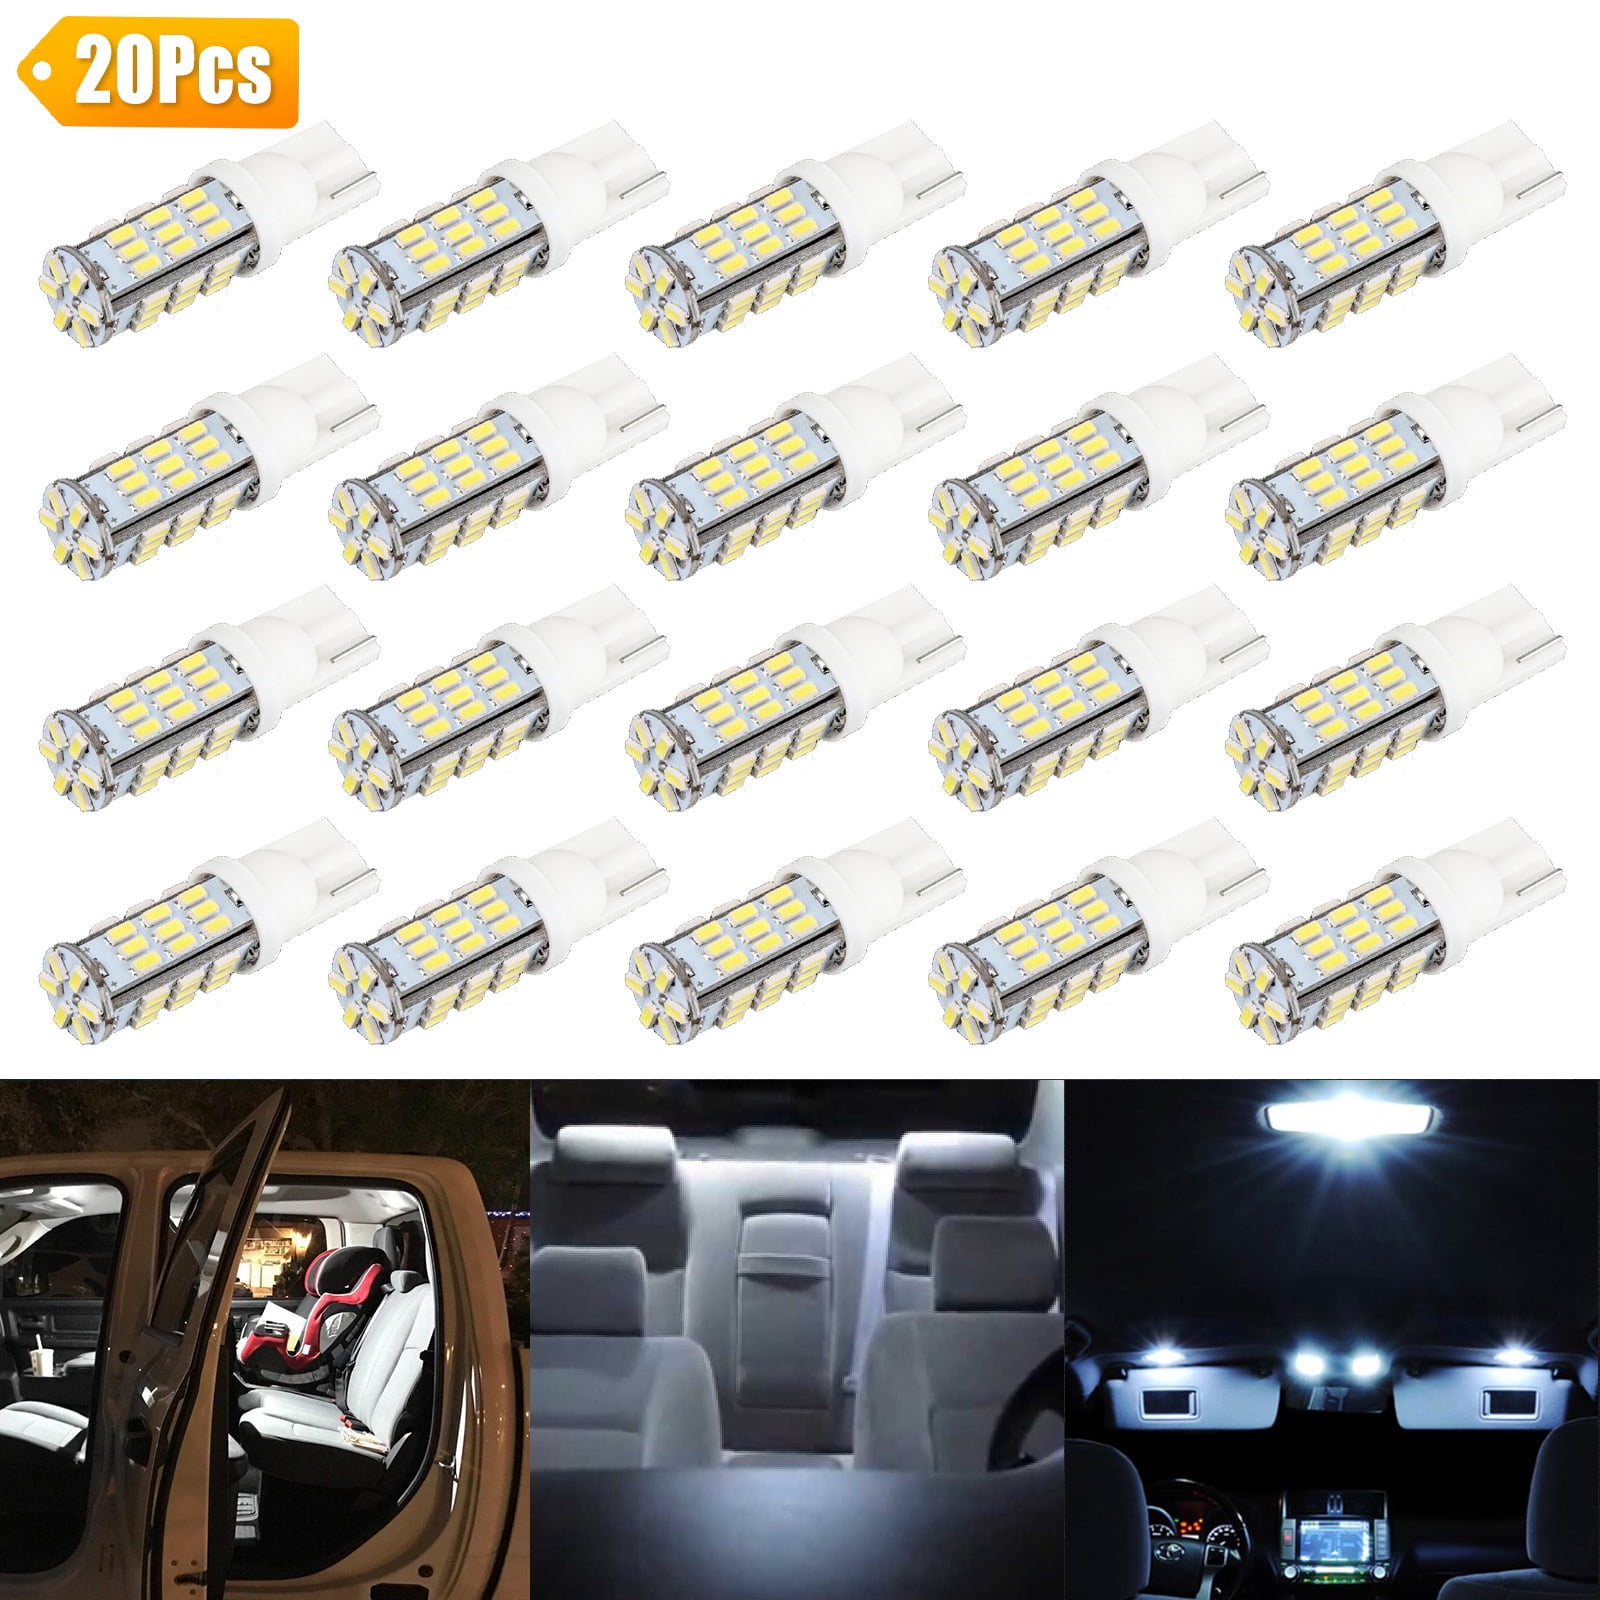 PESIC 20x T10 921 192 194 Wedge RV Trailer 42-SMD LED Super Bright 3500K Warm White Car Backup Reverse Interior Light Bulbs 